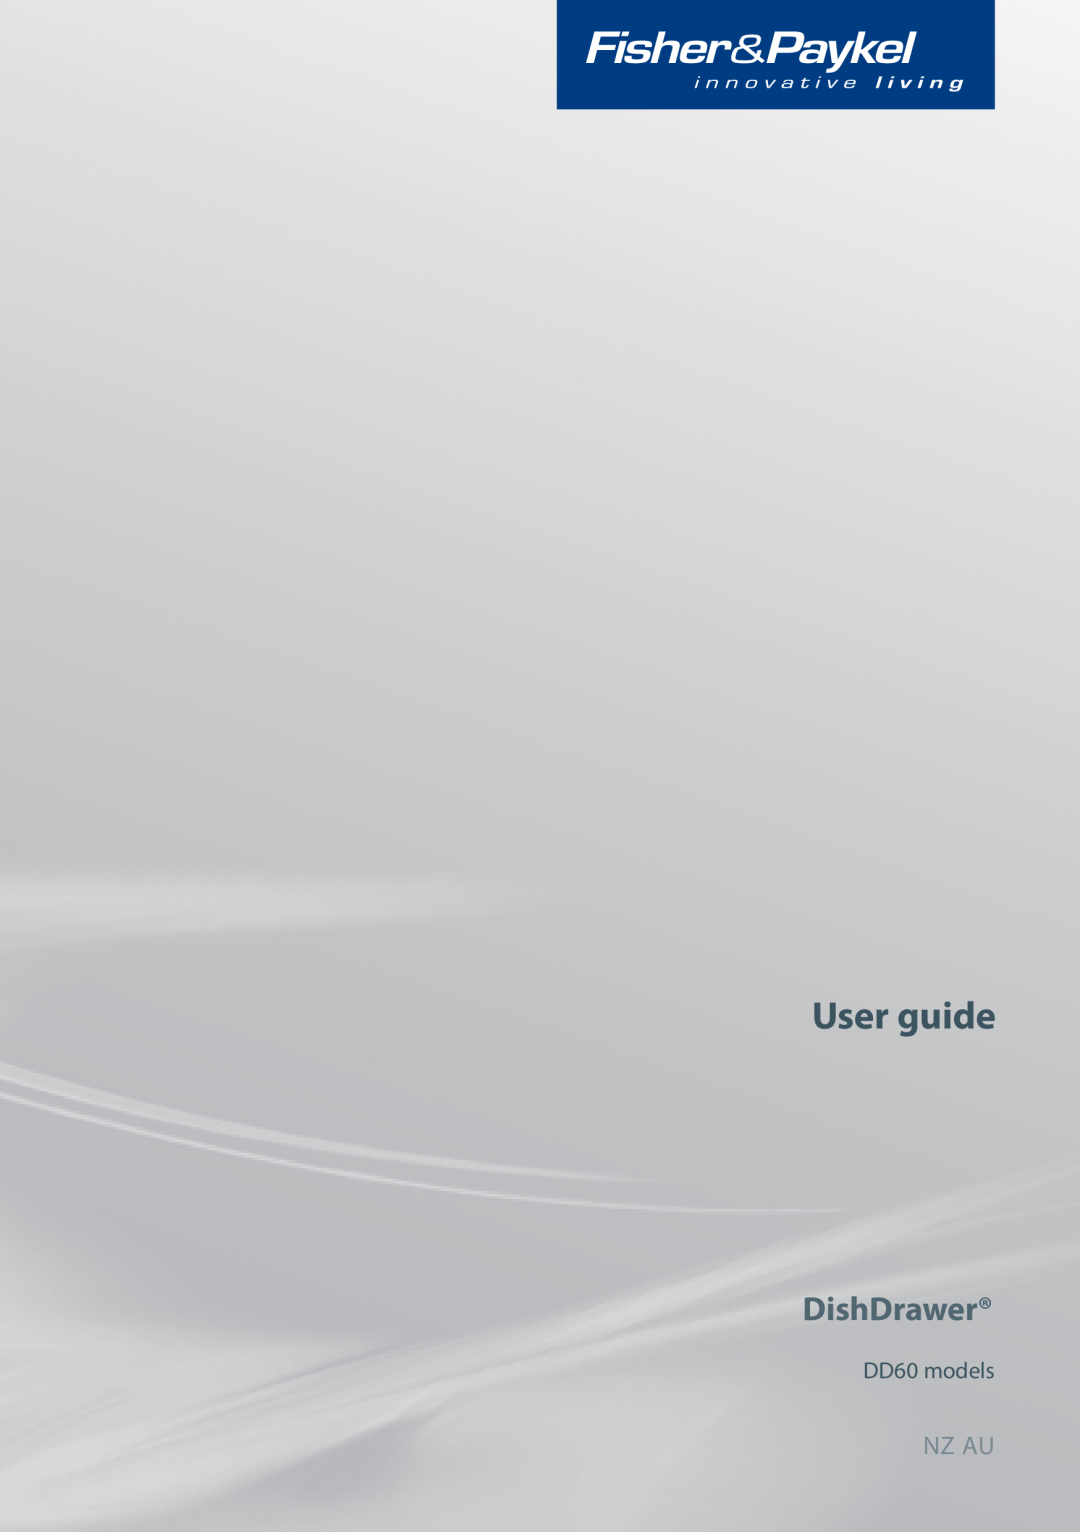 Fisher & Paykel DD60 manual User guide, DishDrawer, Nz Au 